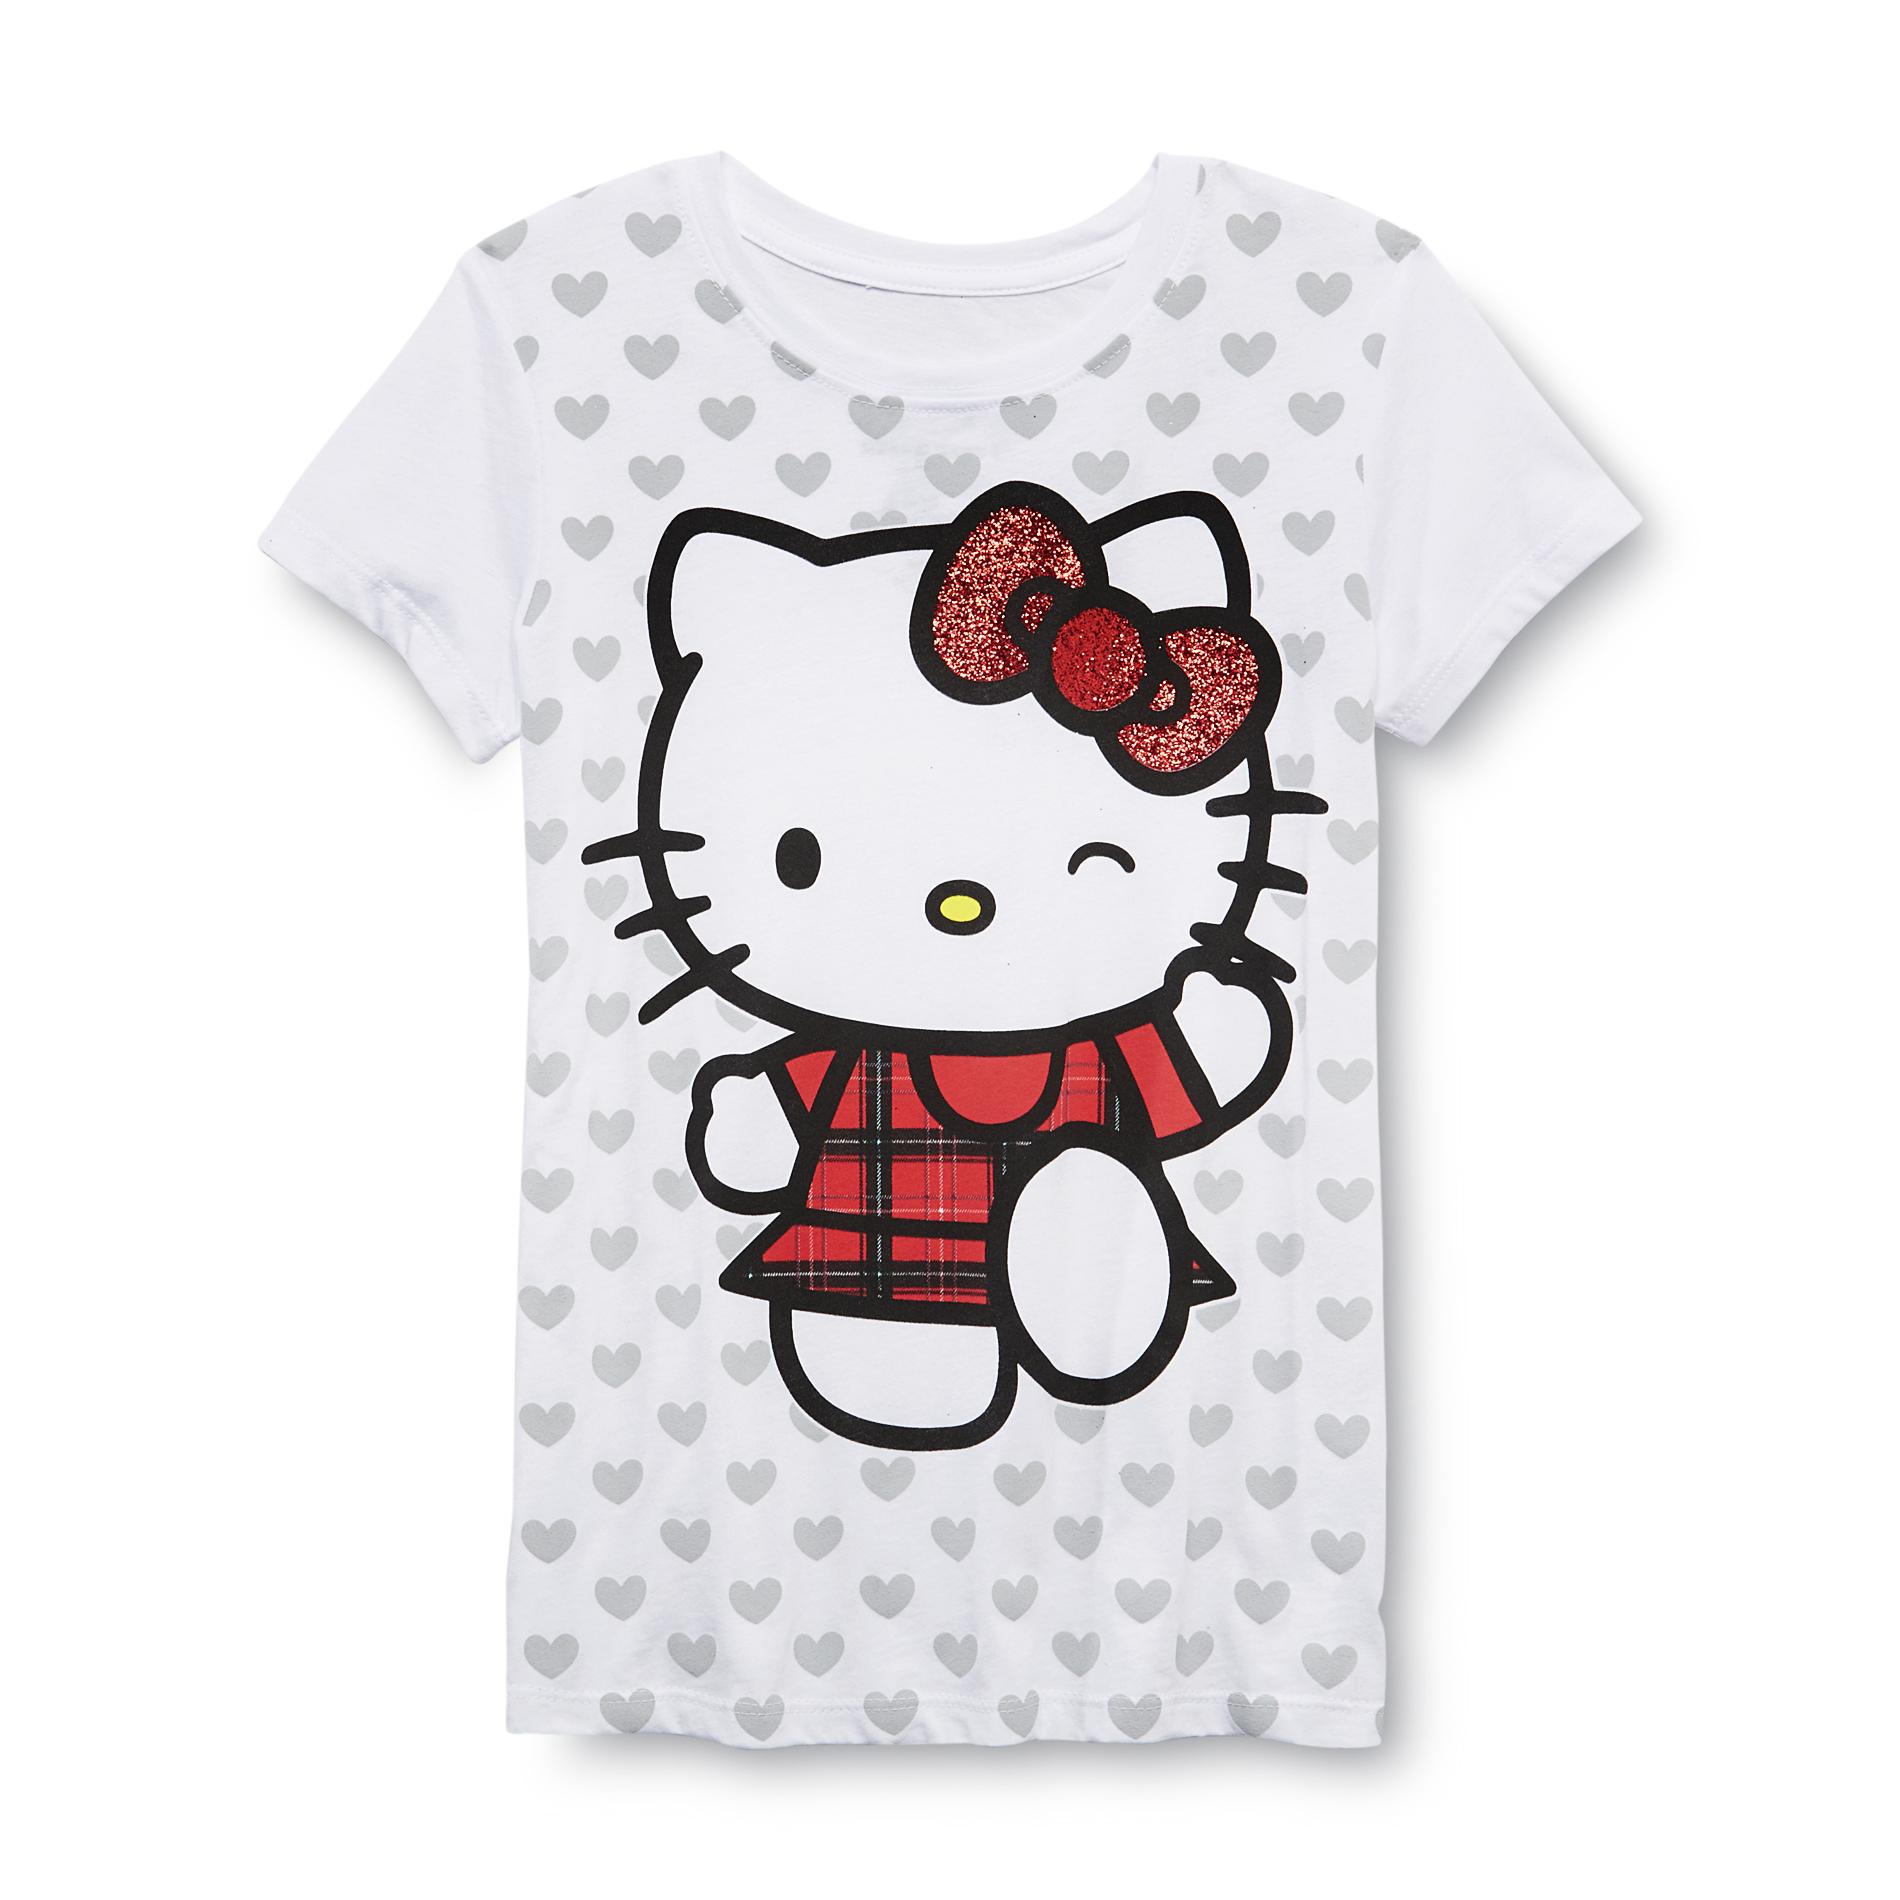 Hello Kitty Girl's Graphic T-Shirt - Hearts